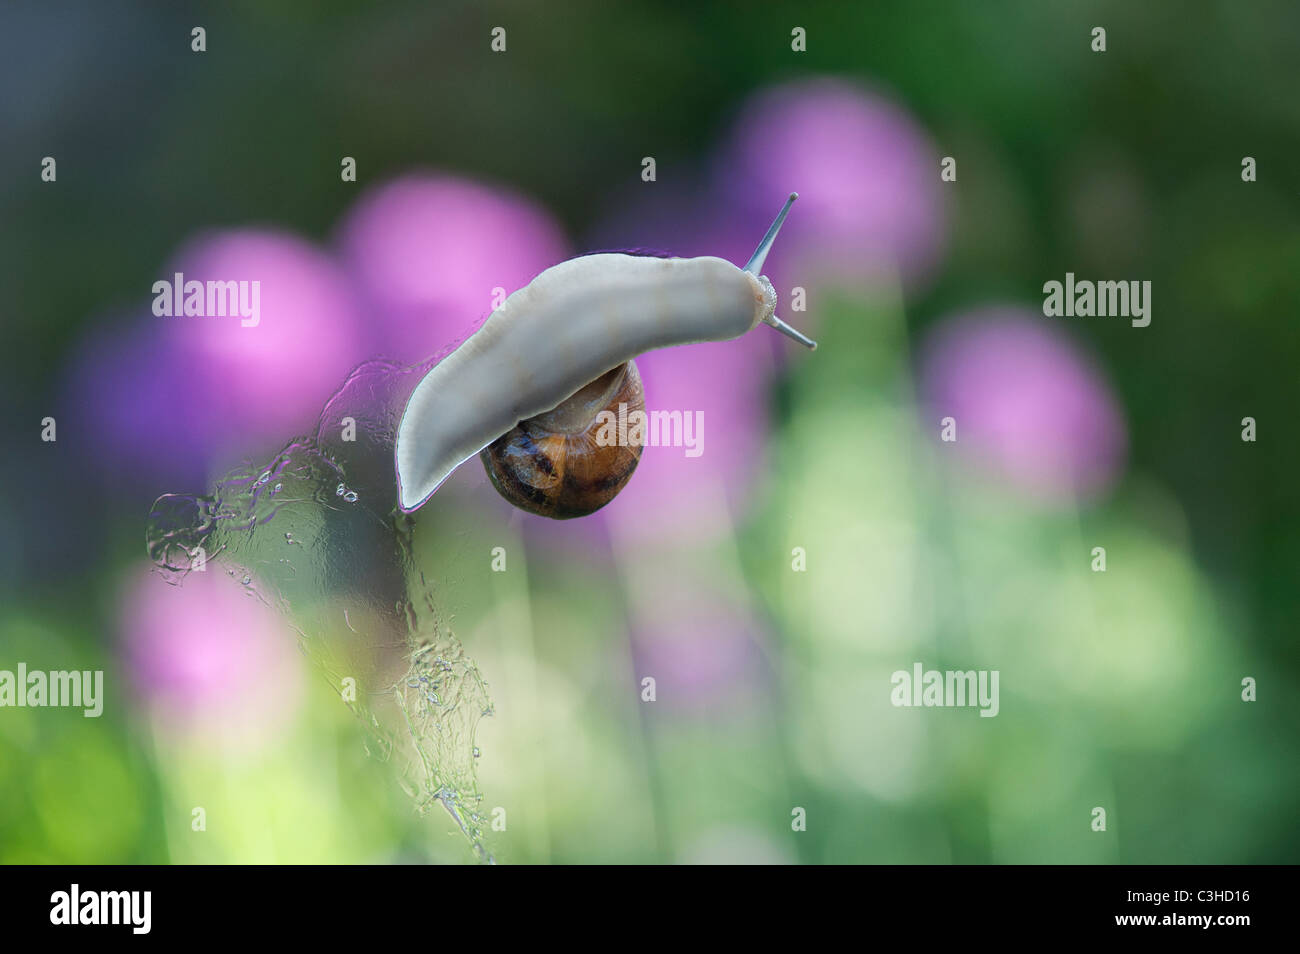 Garden snail on greenhouse glass Stock Photo